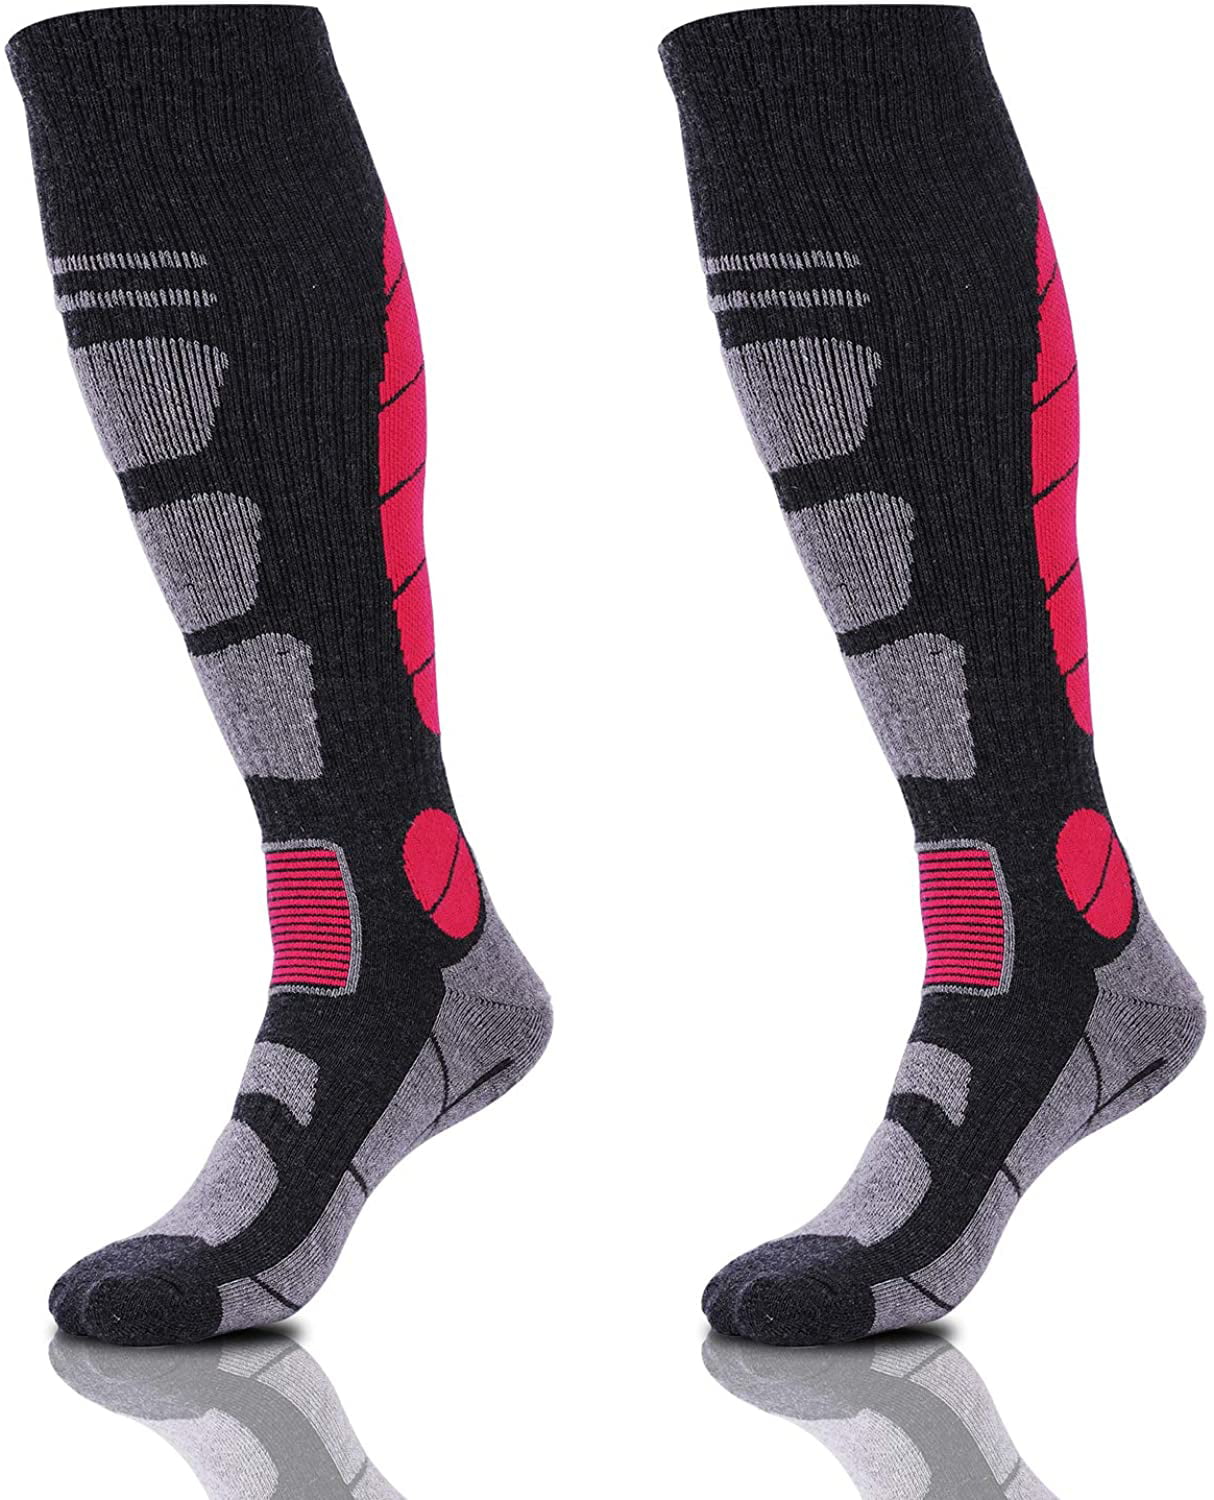 TENEM Men and Women Winter Ski Socks Warm Thermal Socks for Cold Weather Calf Compression Snowboard Socks 